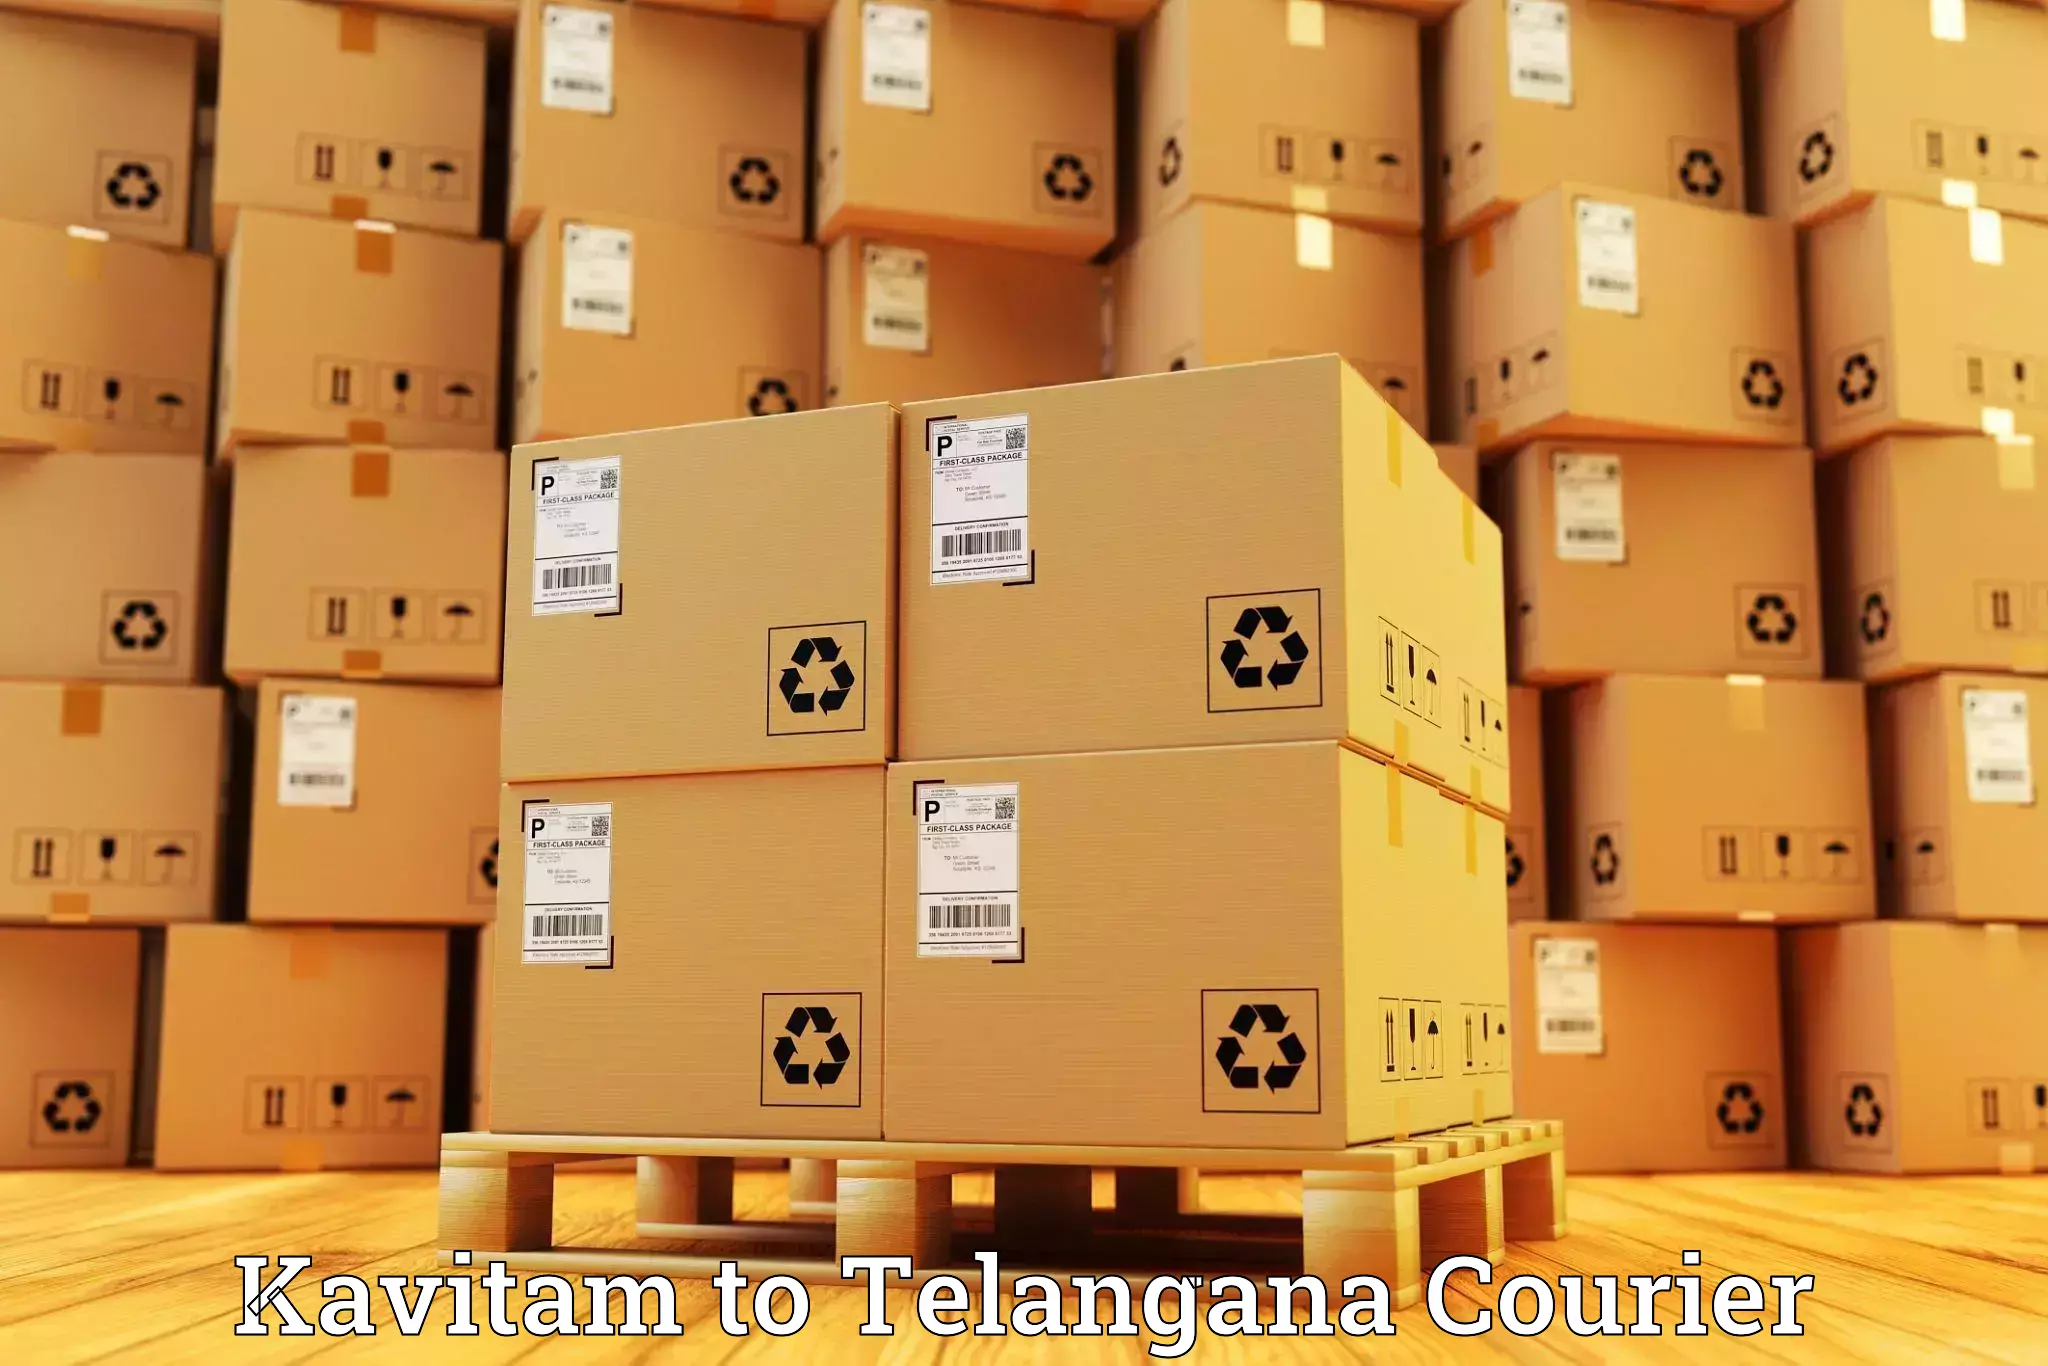 State-of-the-art courier technology Kavitam to Koratla